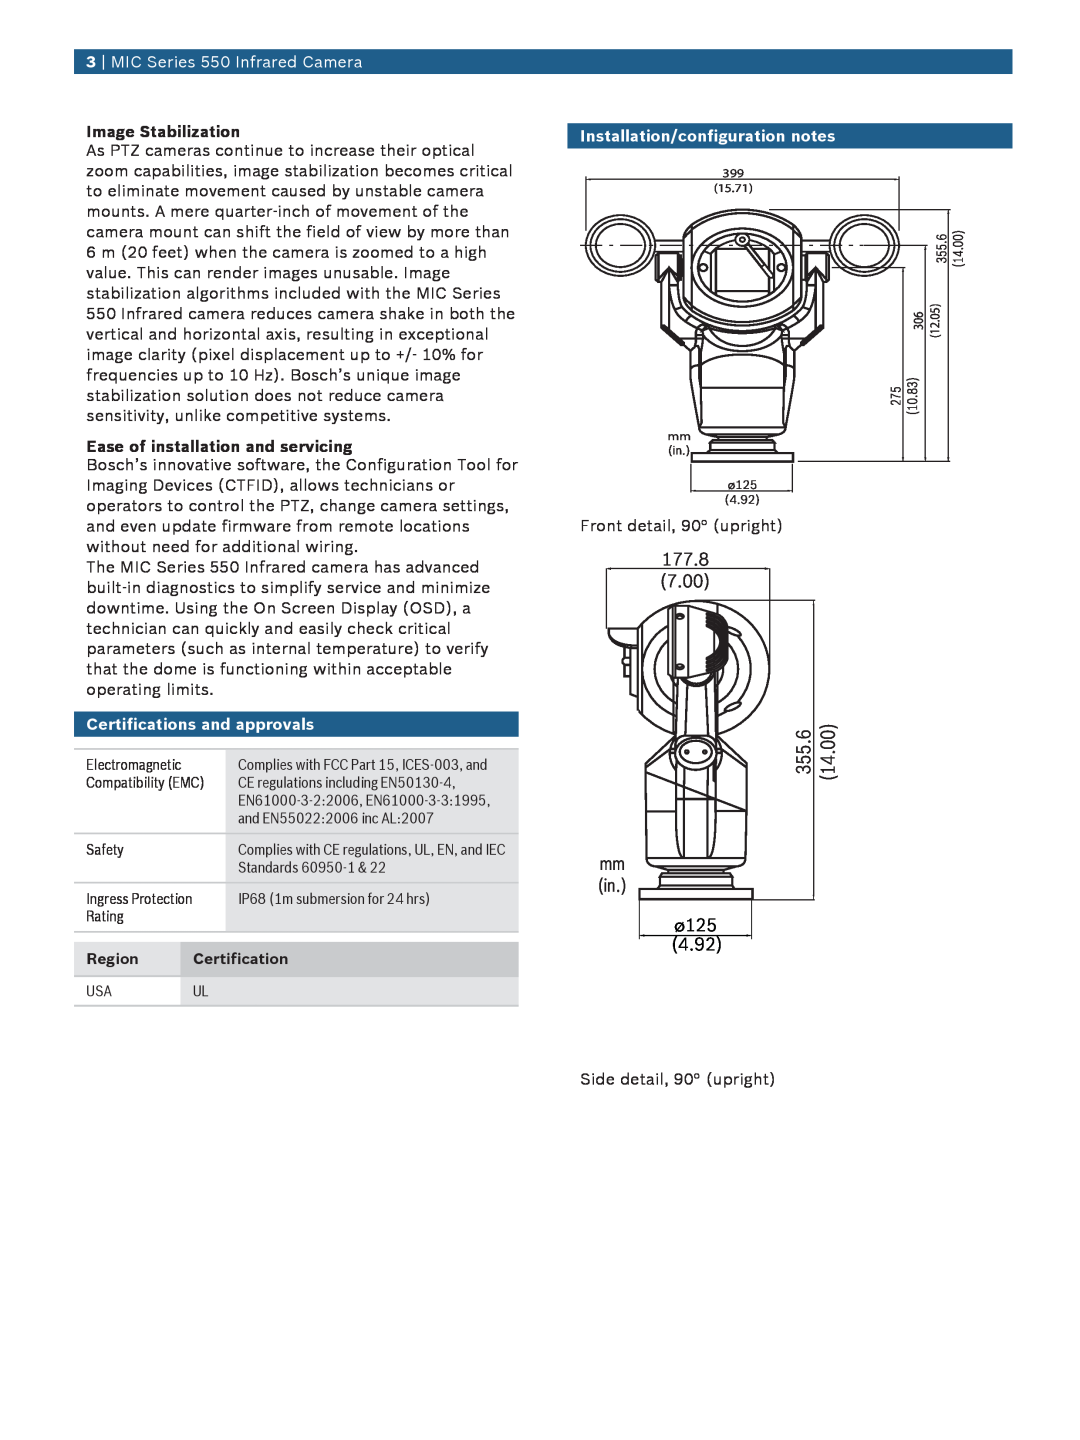 Bosch Appliances manual 355.6, 14.00, 177.8 7.00, Ø125 4.92, MIC Series 550 Infrared Camera, Image Stabilization 